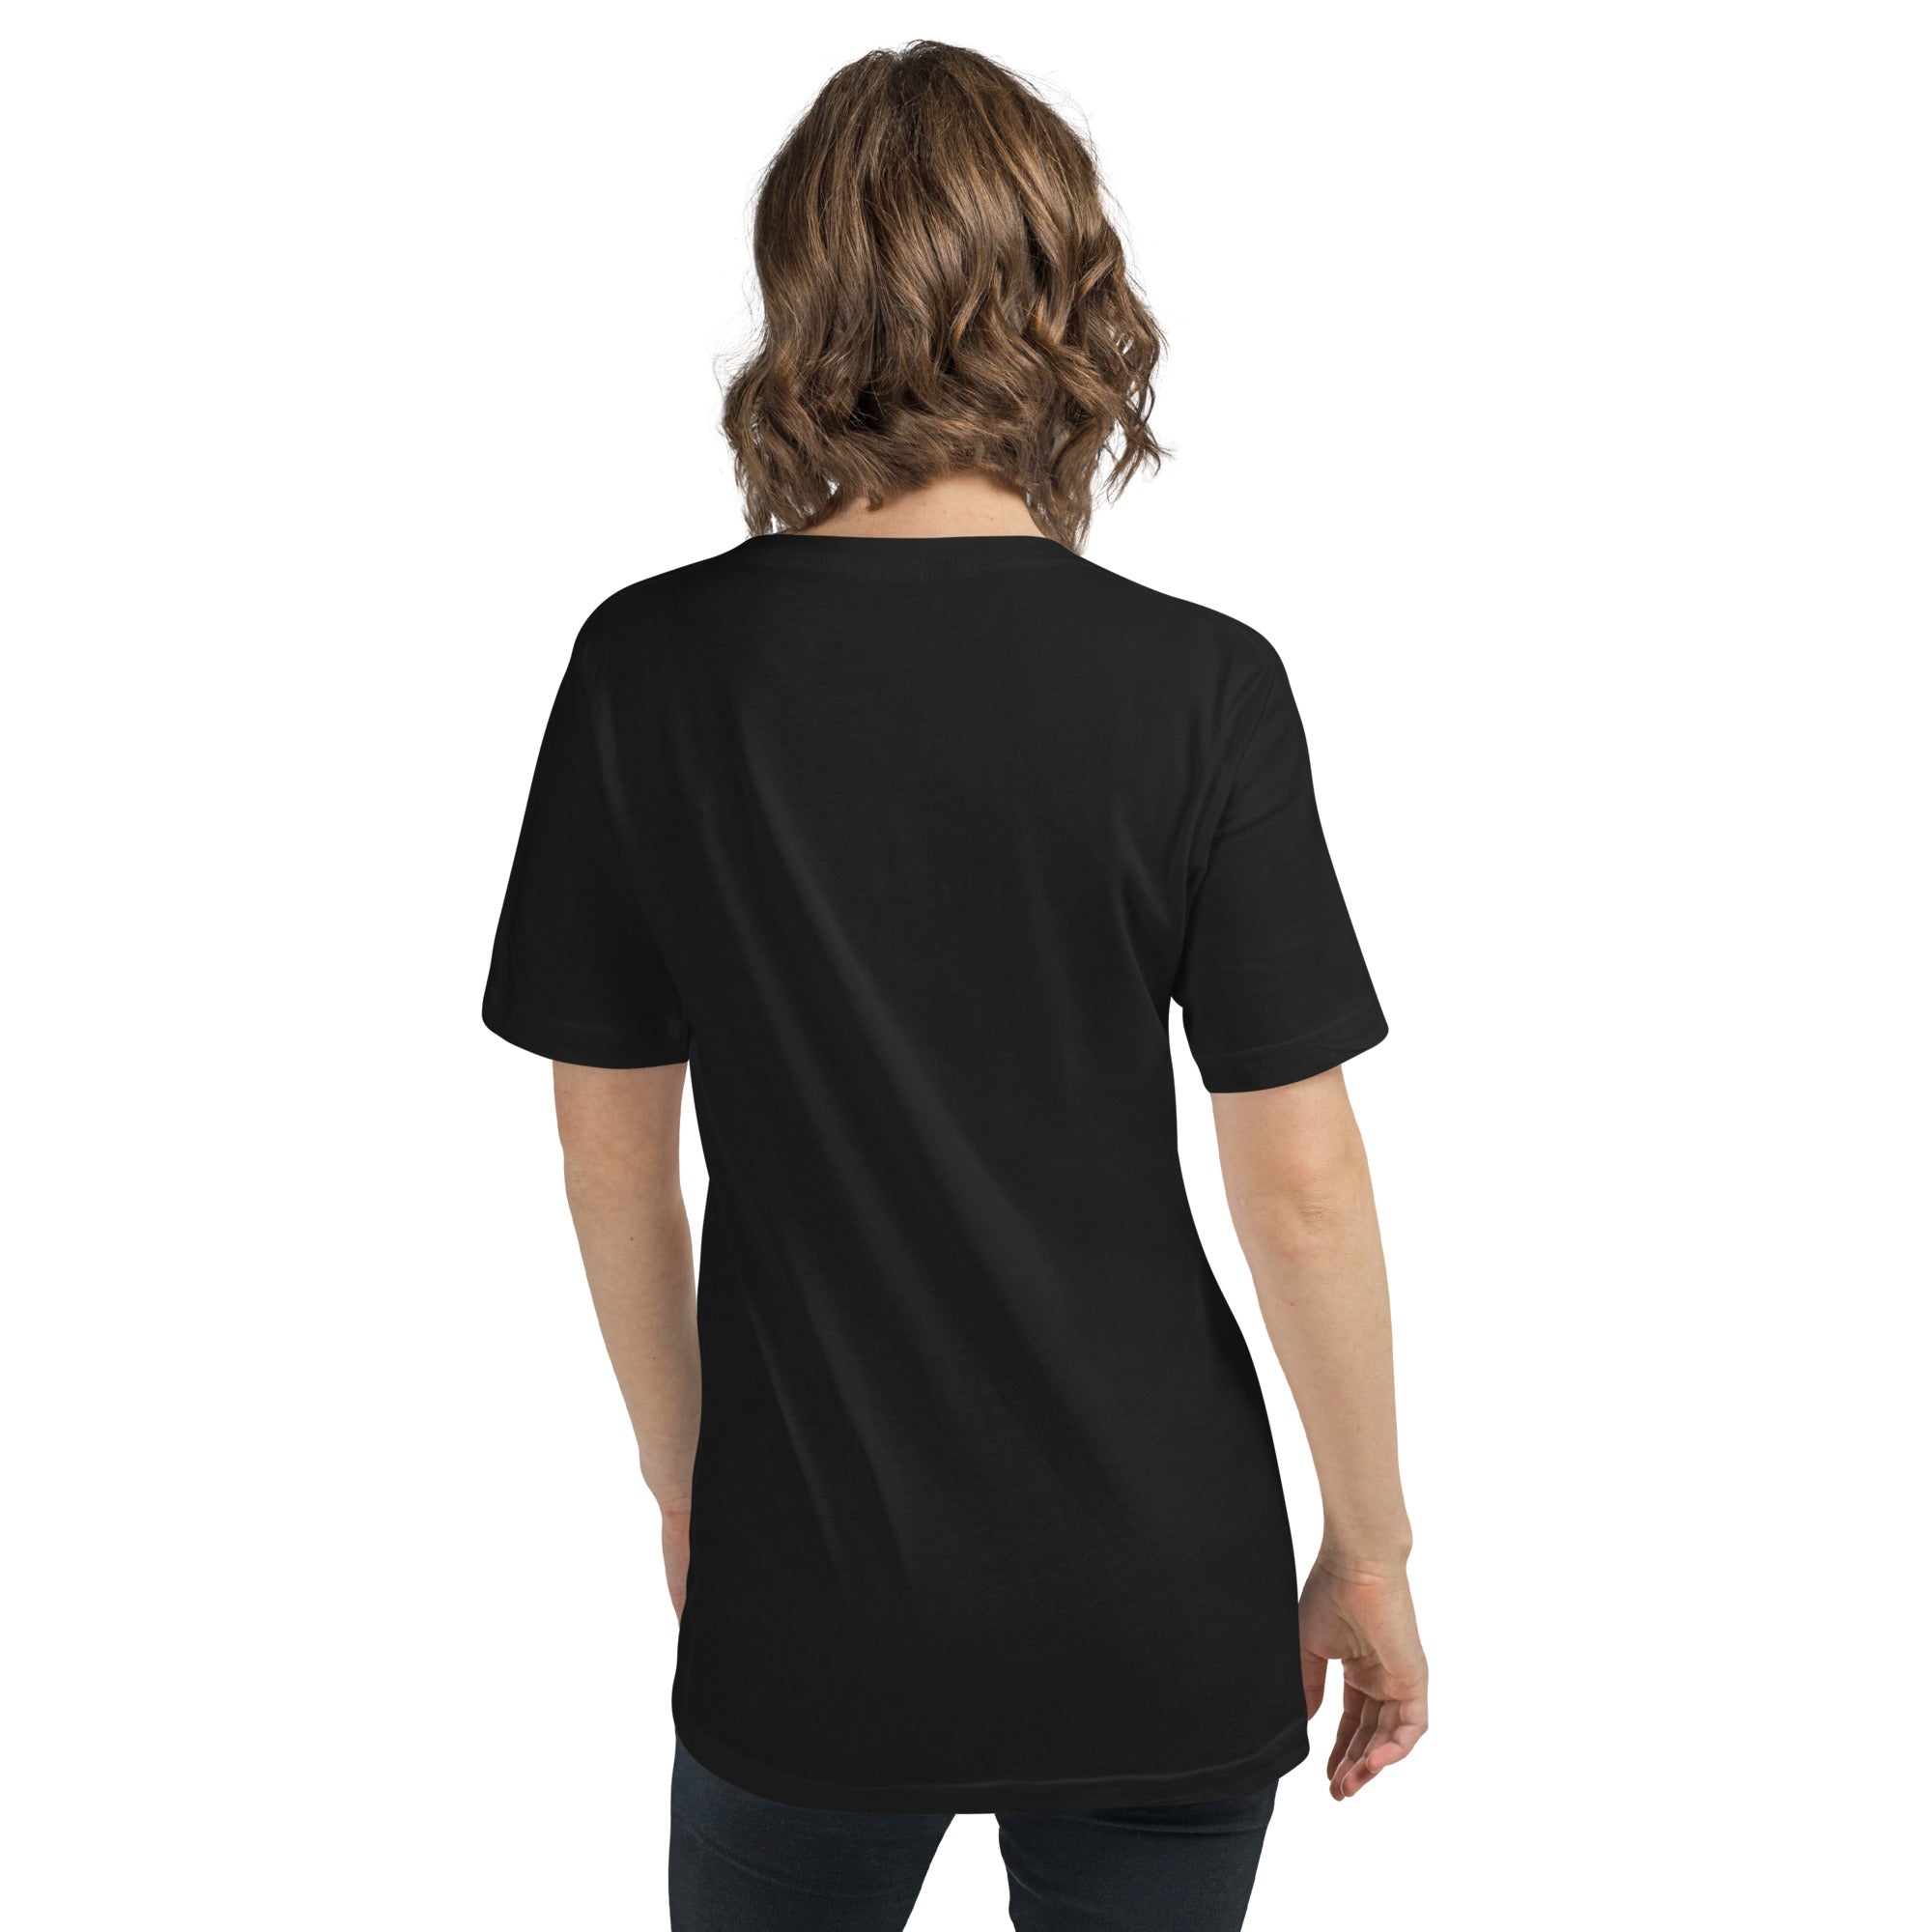 White Anarchy is Order Symbol Punk Rock Women’s Short Sleeve V-Neck T-Shirt